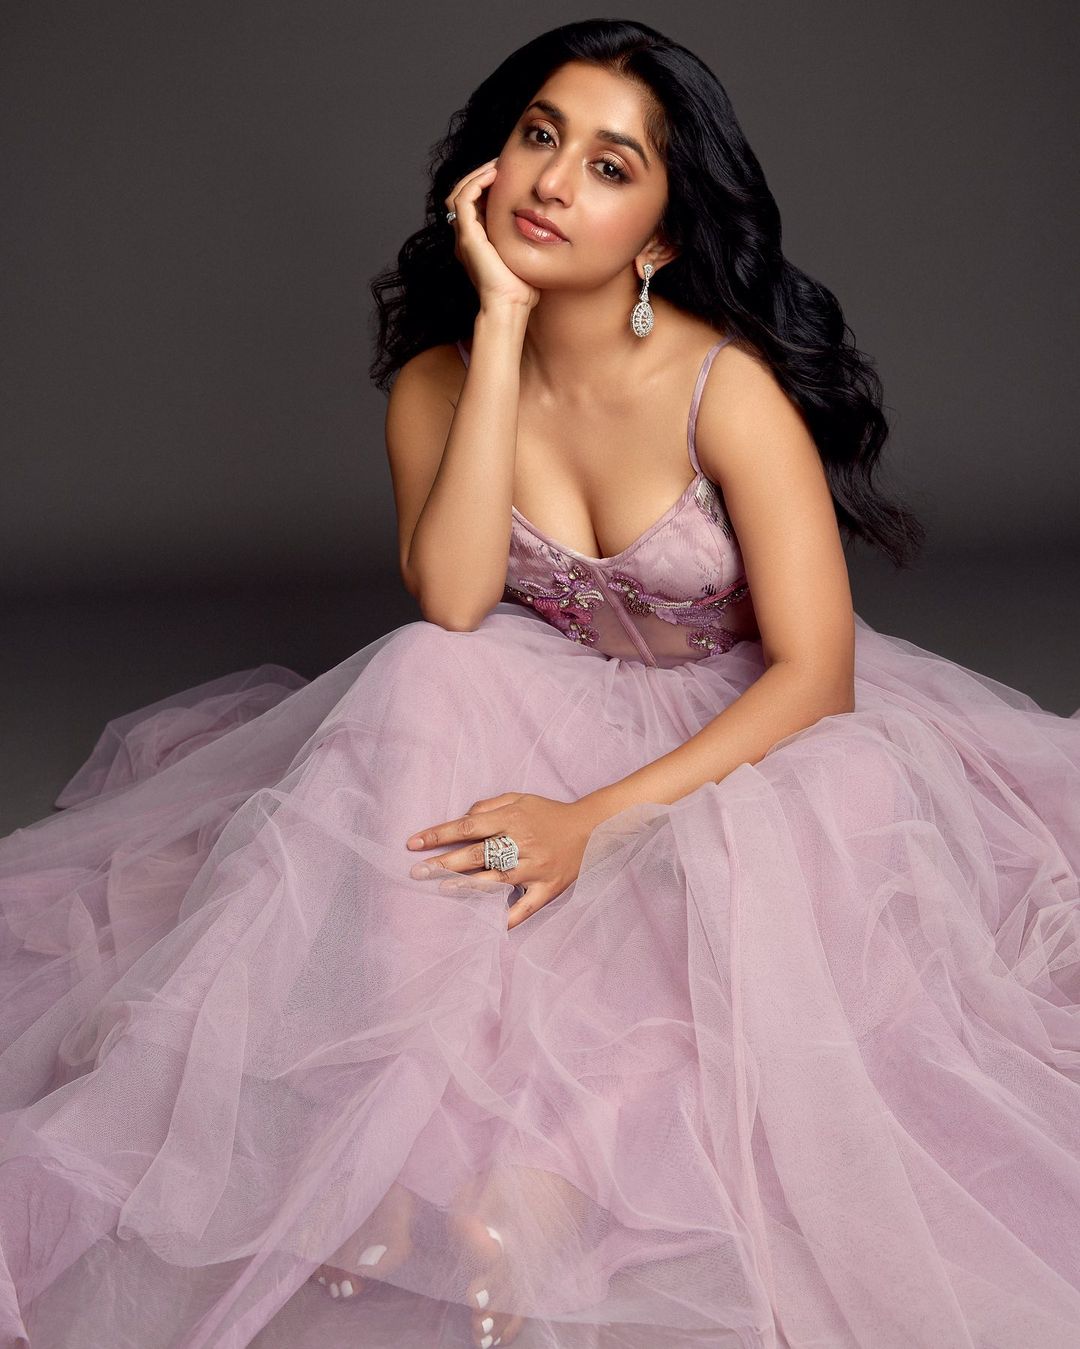 Actress Meera Jasmine Hot Sexy Cleavage Show In Pink Dress Photos 3